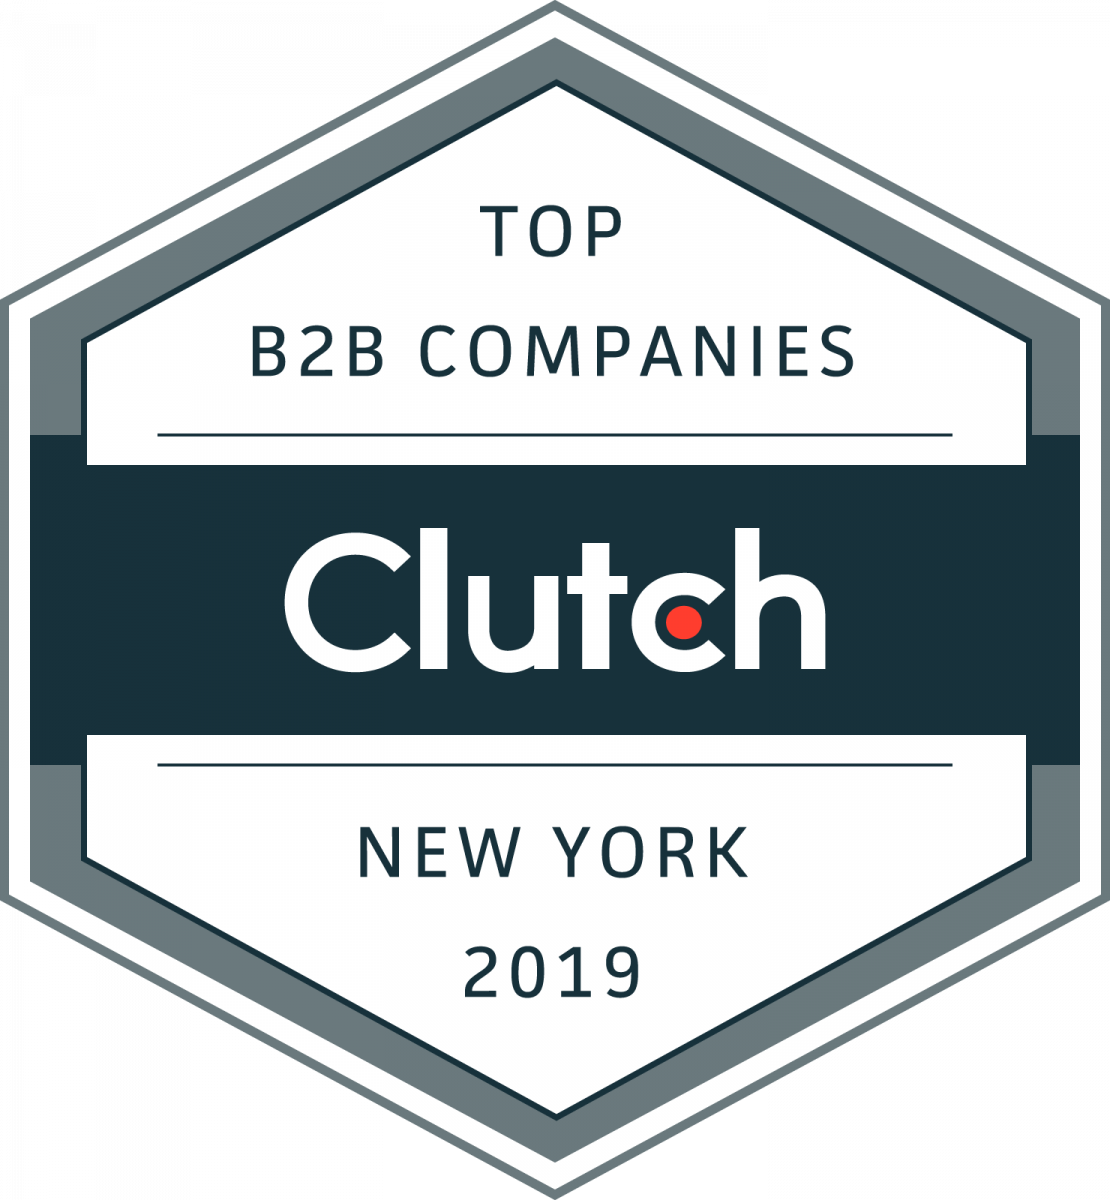 Top B2B Companies New York 2019